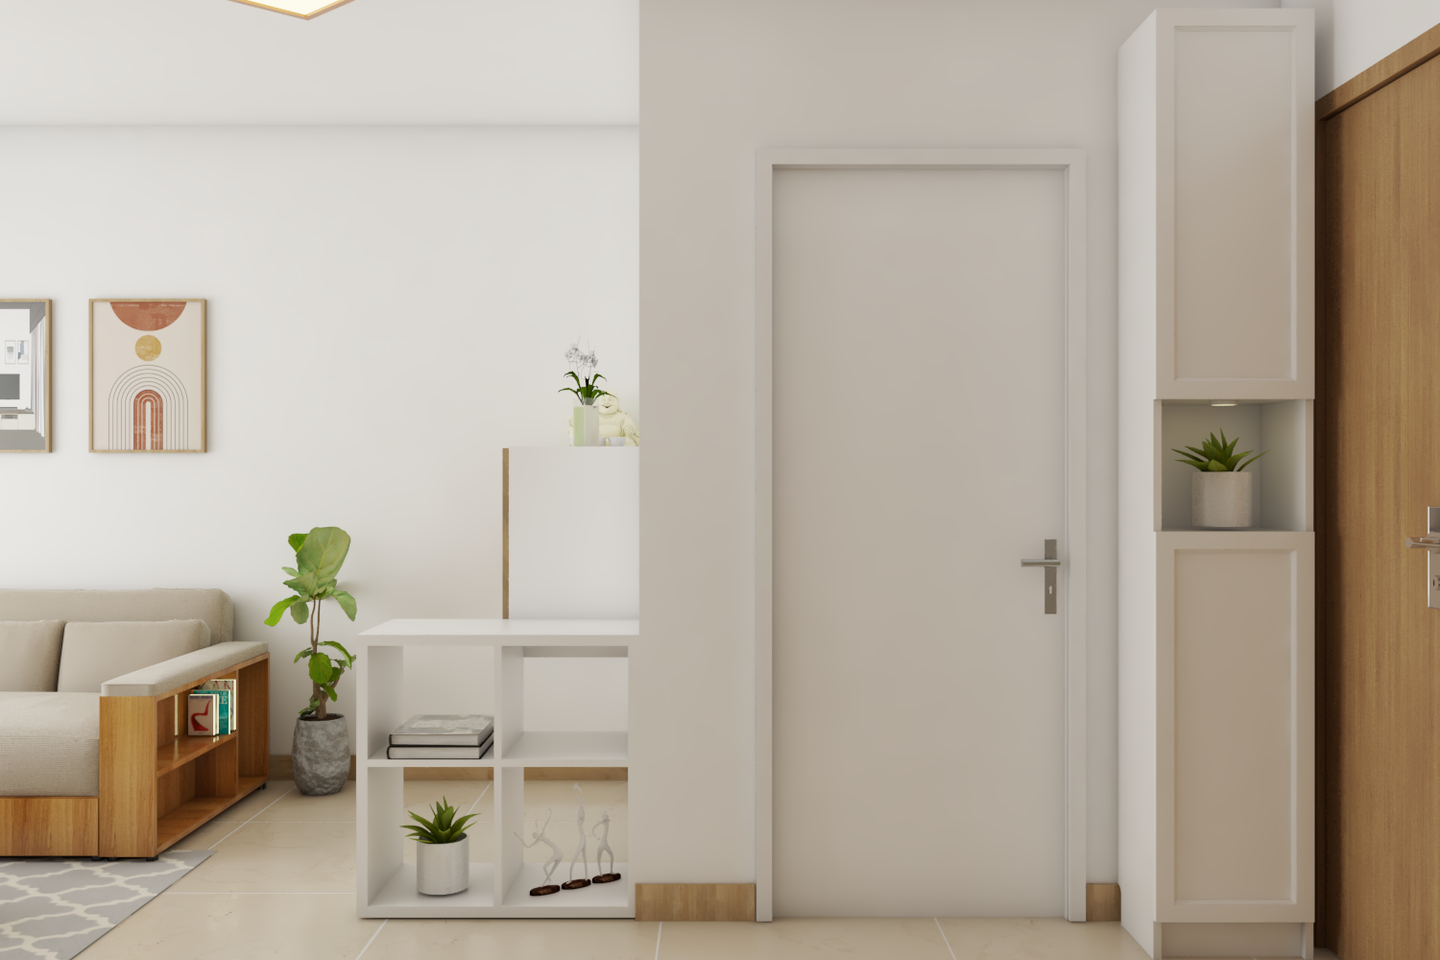 Compact Foyer With Scandinavian Interiors - Livspace